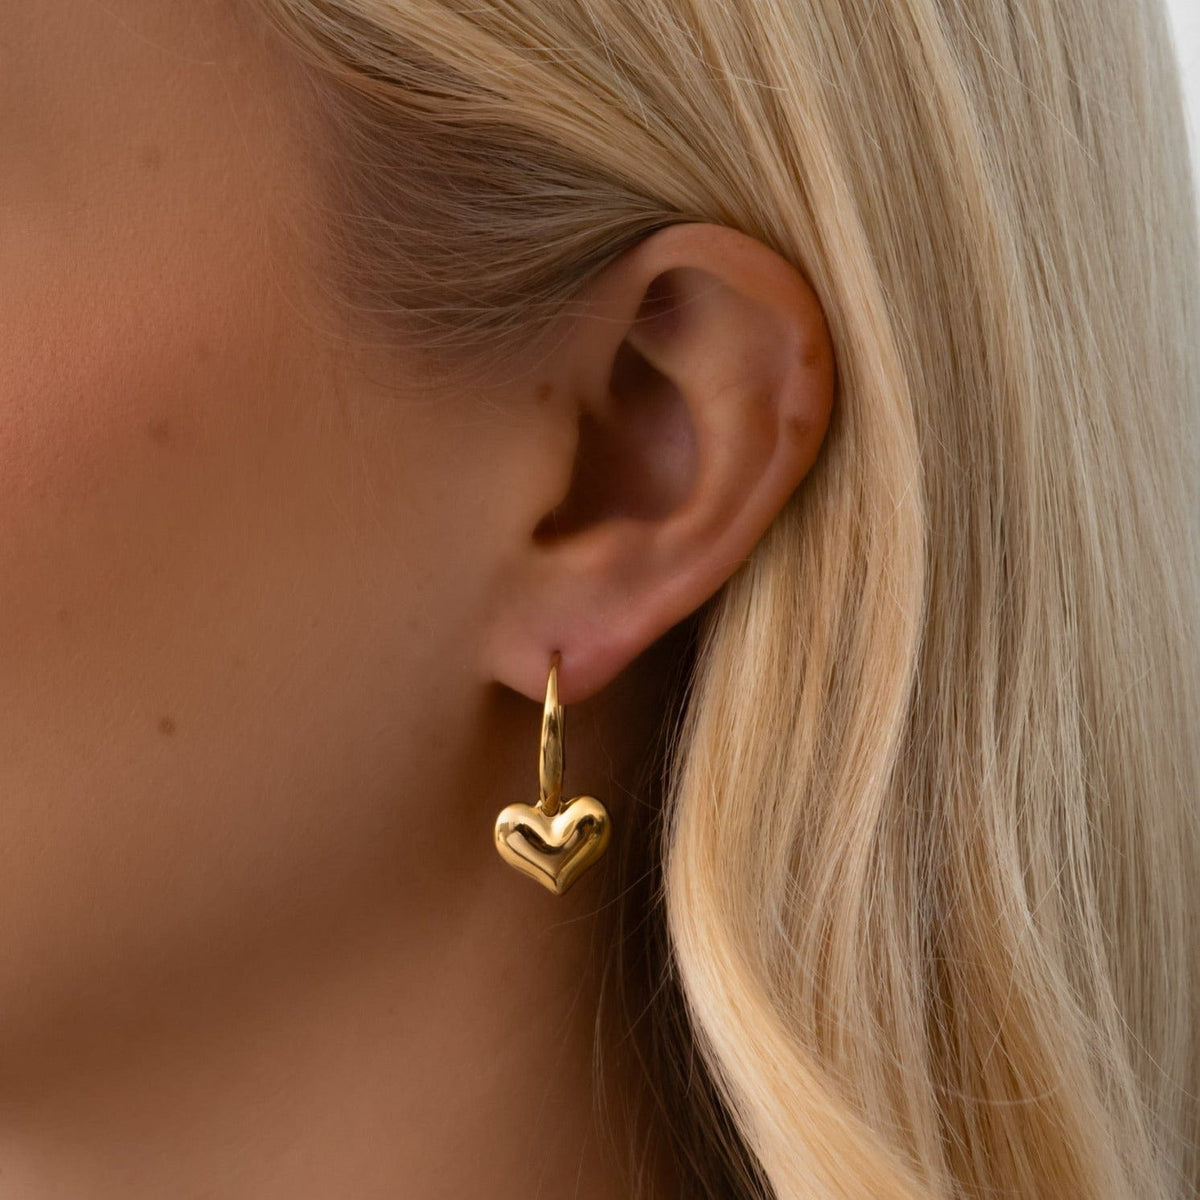 BohoMoon Stainless Steel Maria Heart Earrings Gold